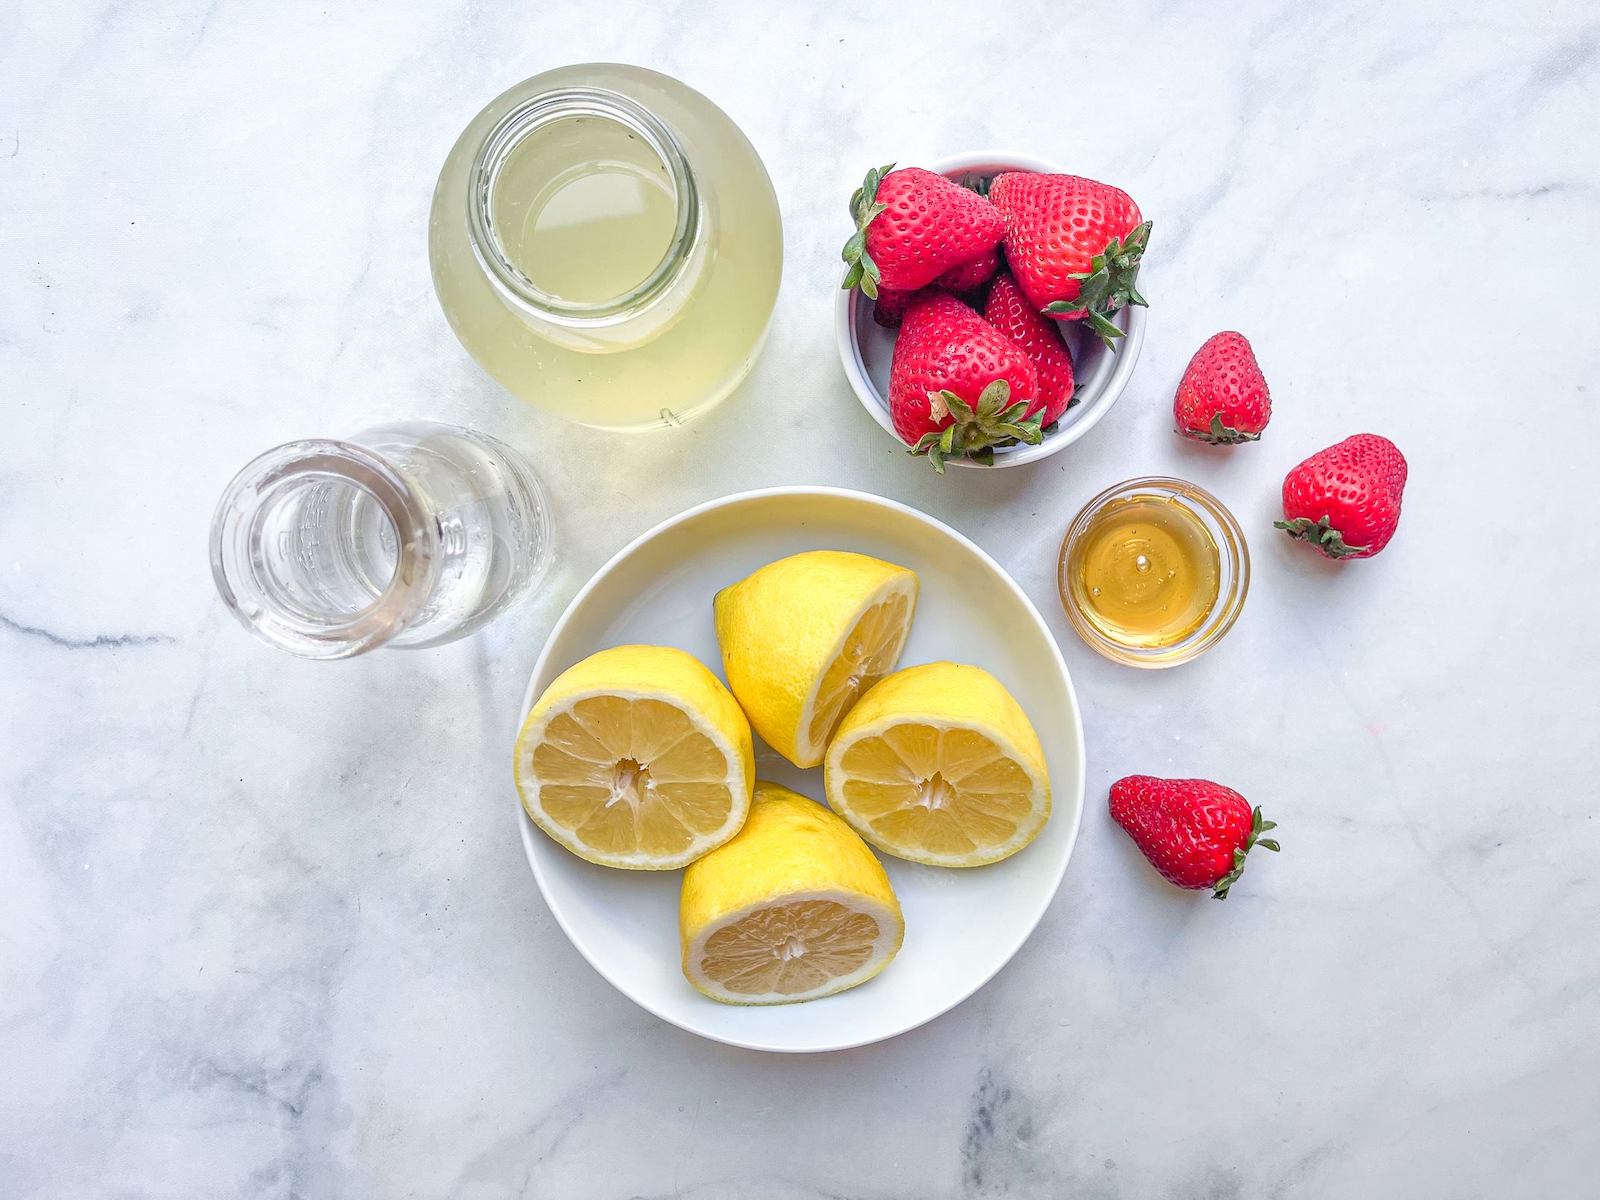 Ingredients for strawberry-lemonade electrolyte drink